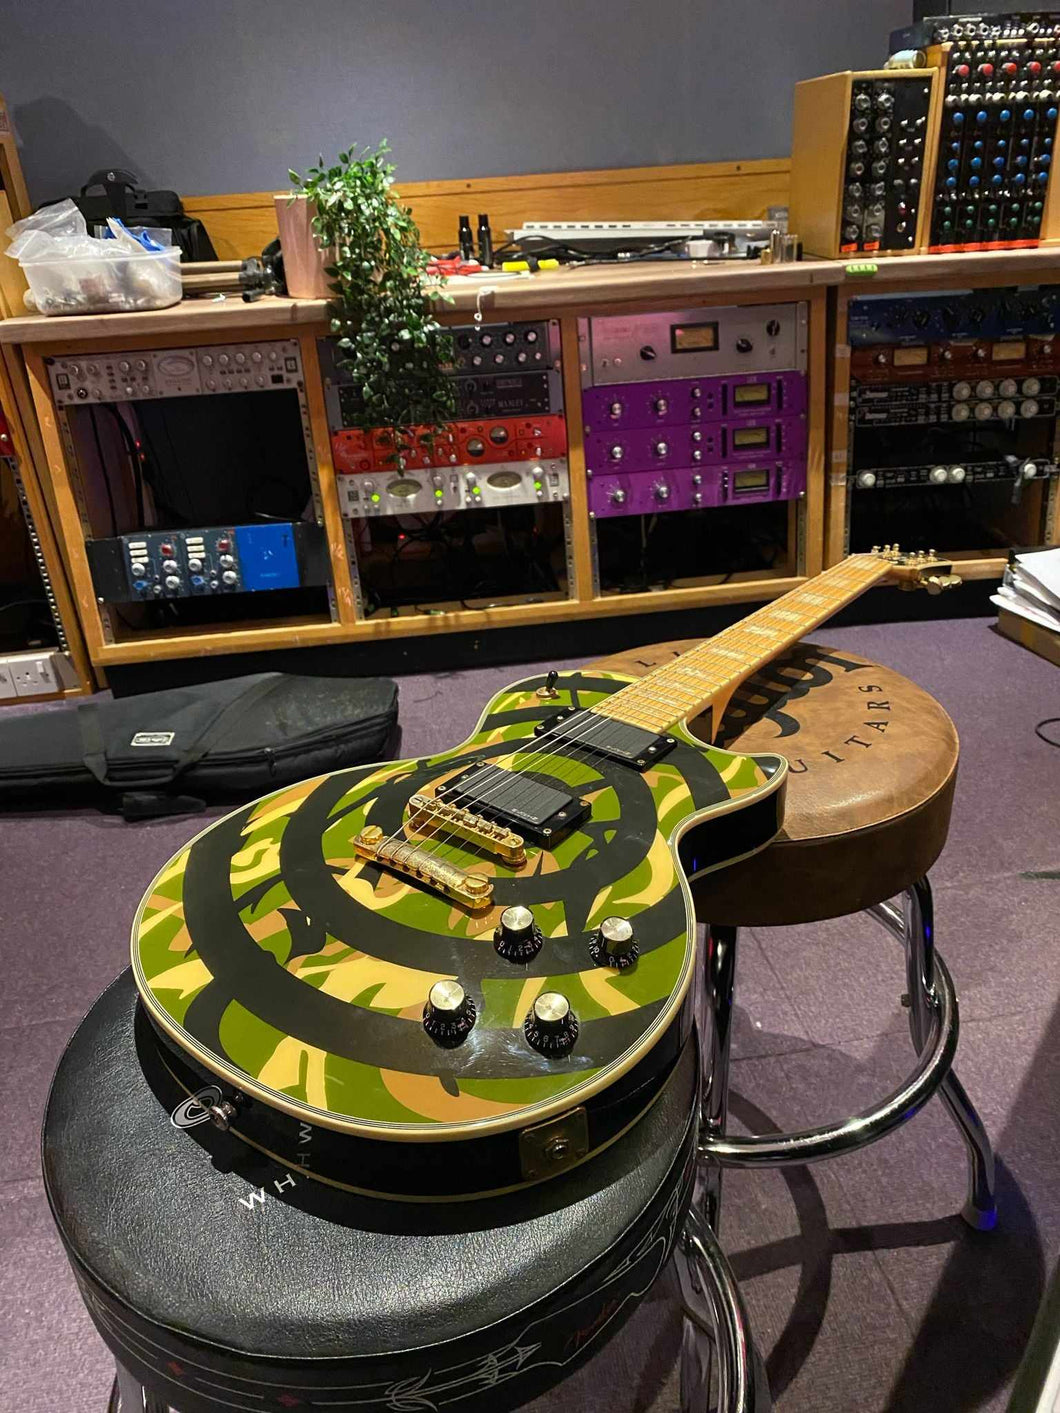 Epiphone Zakk Wylde Les Paul Custom Camo Signature Guitar for sale in Coffin Case!